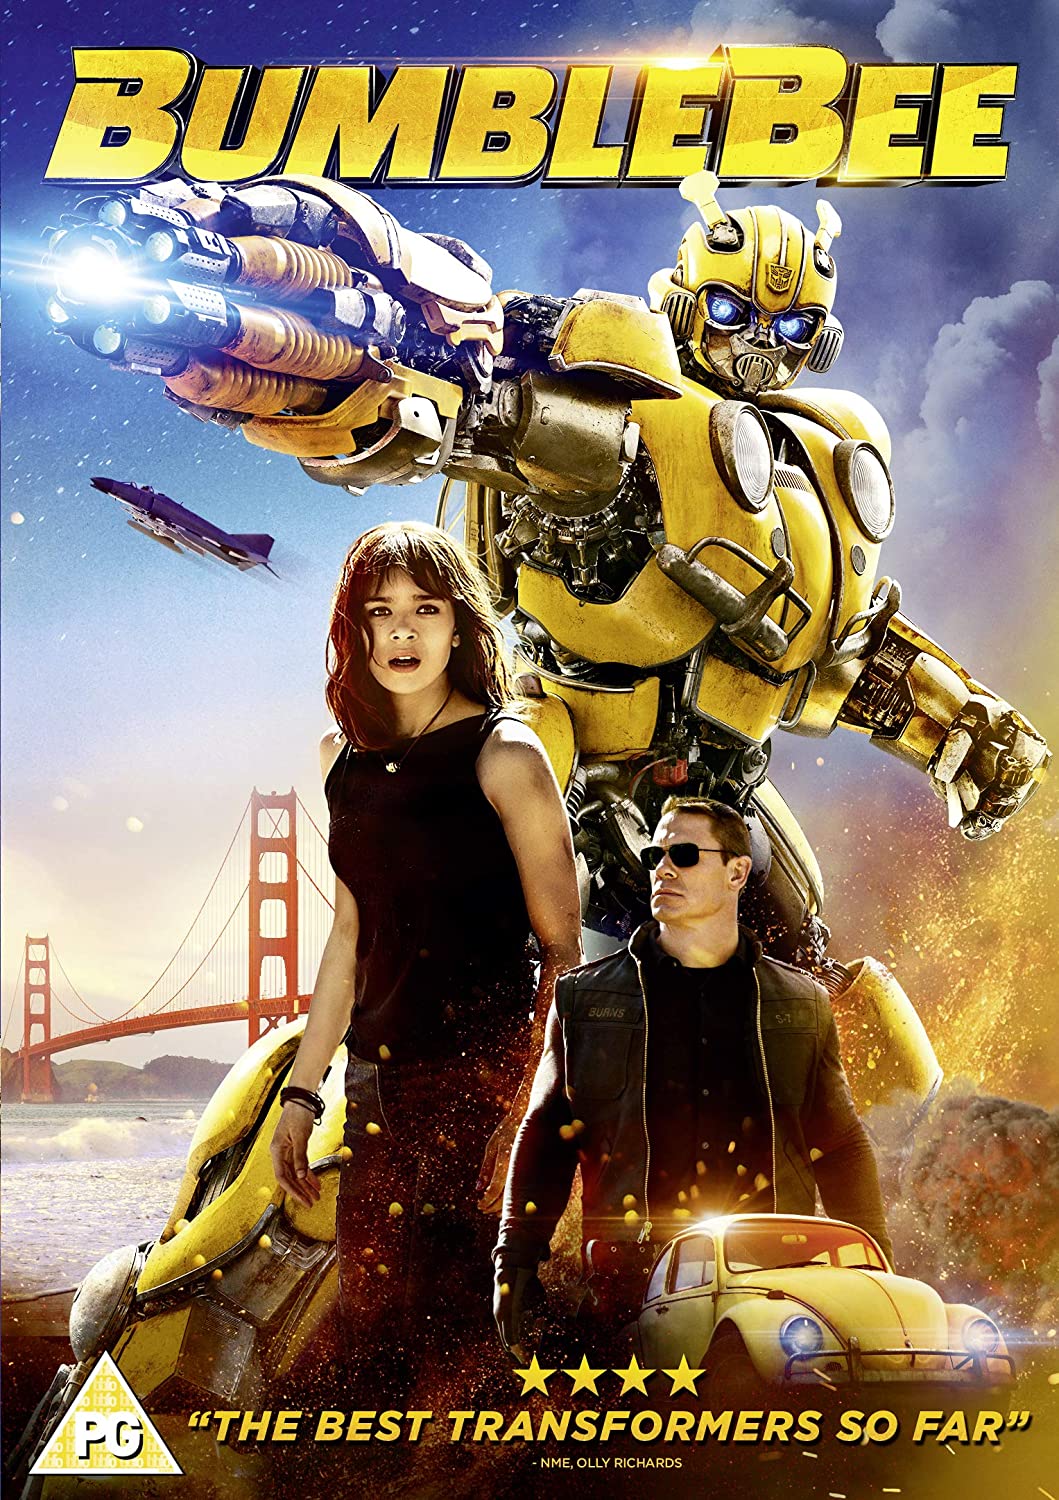 Bumblebee - Action/Sci-fi [DVD]